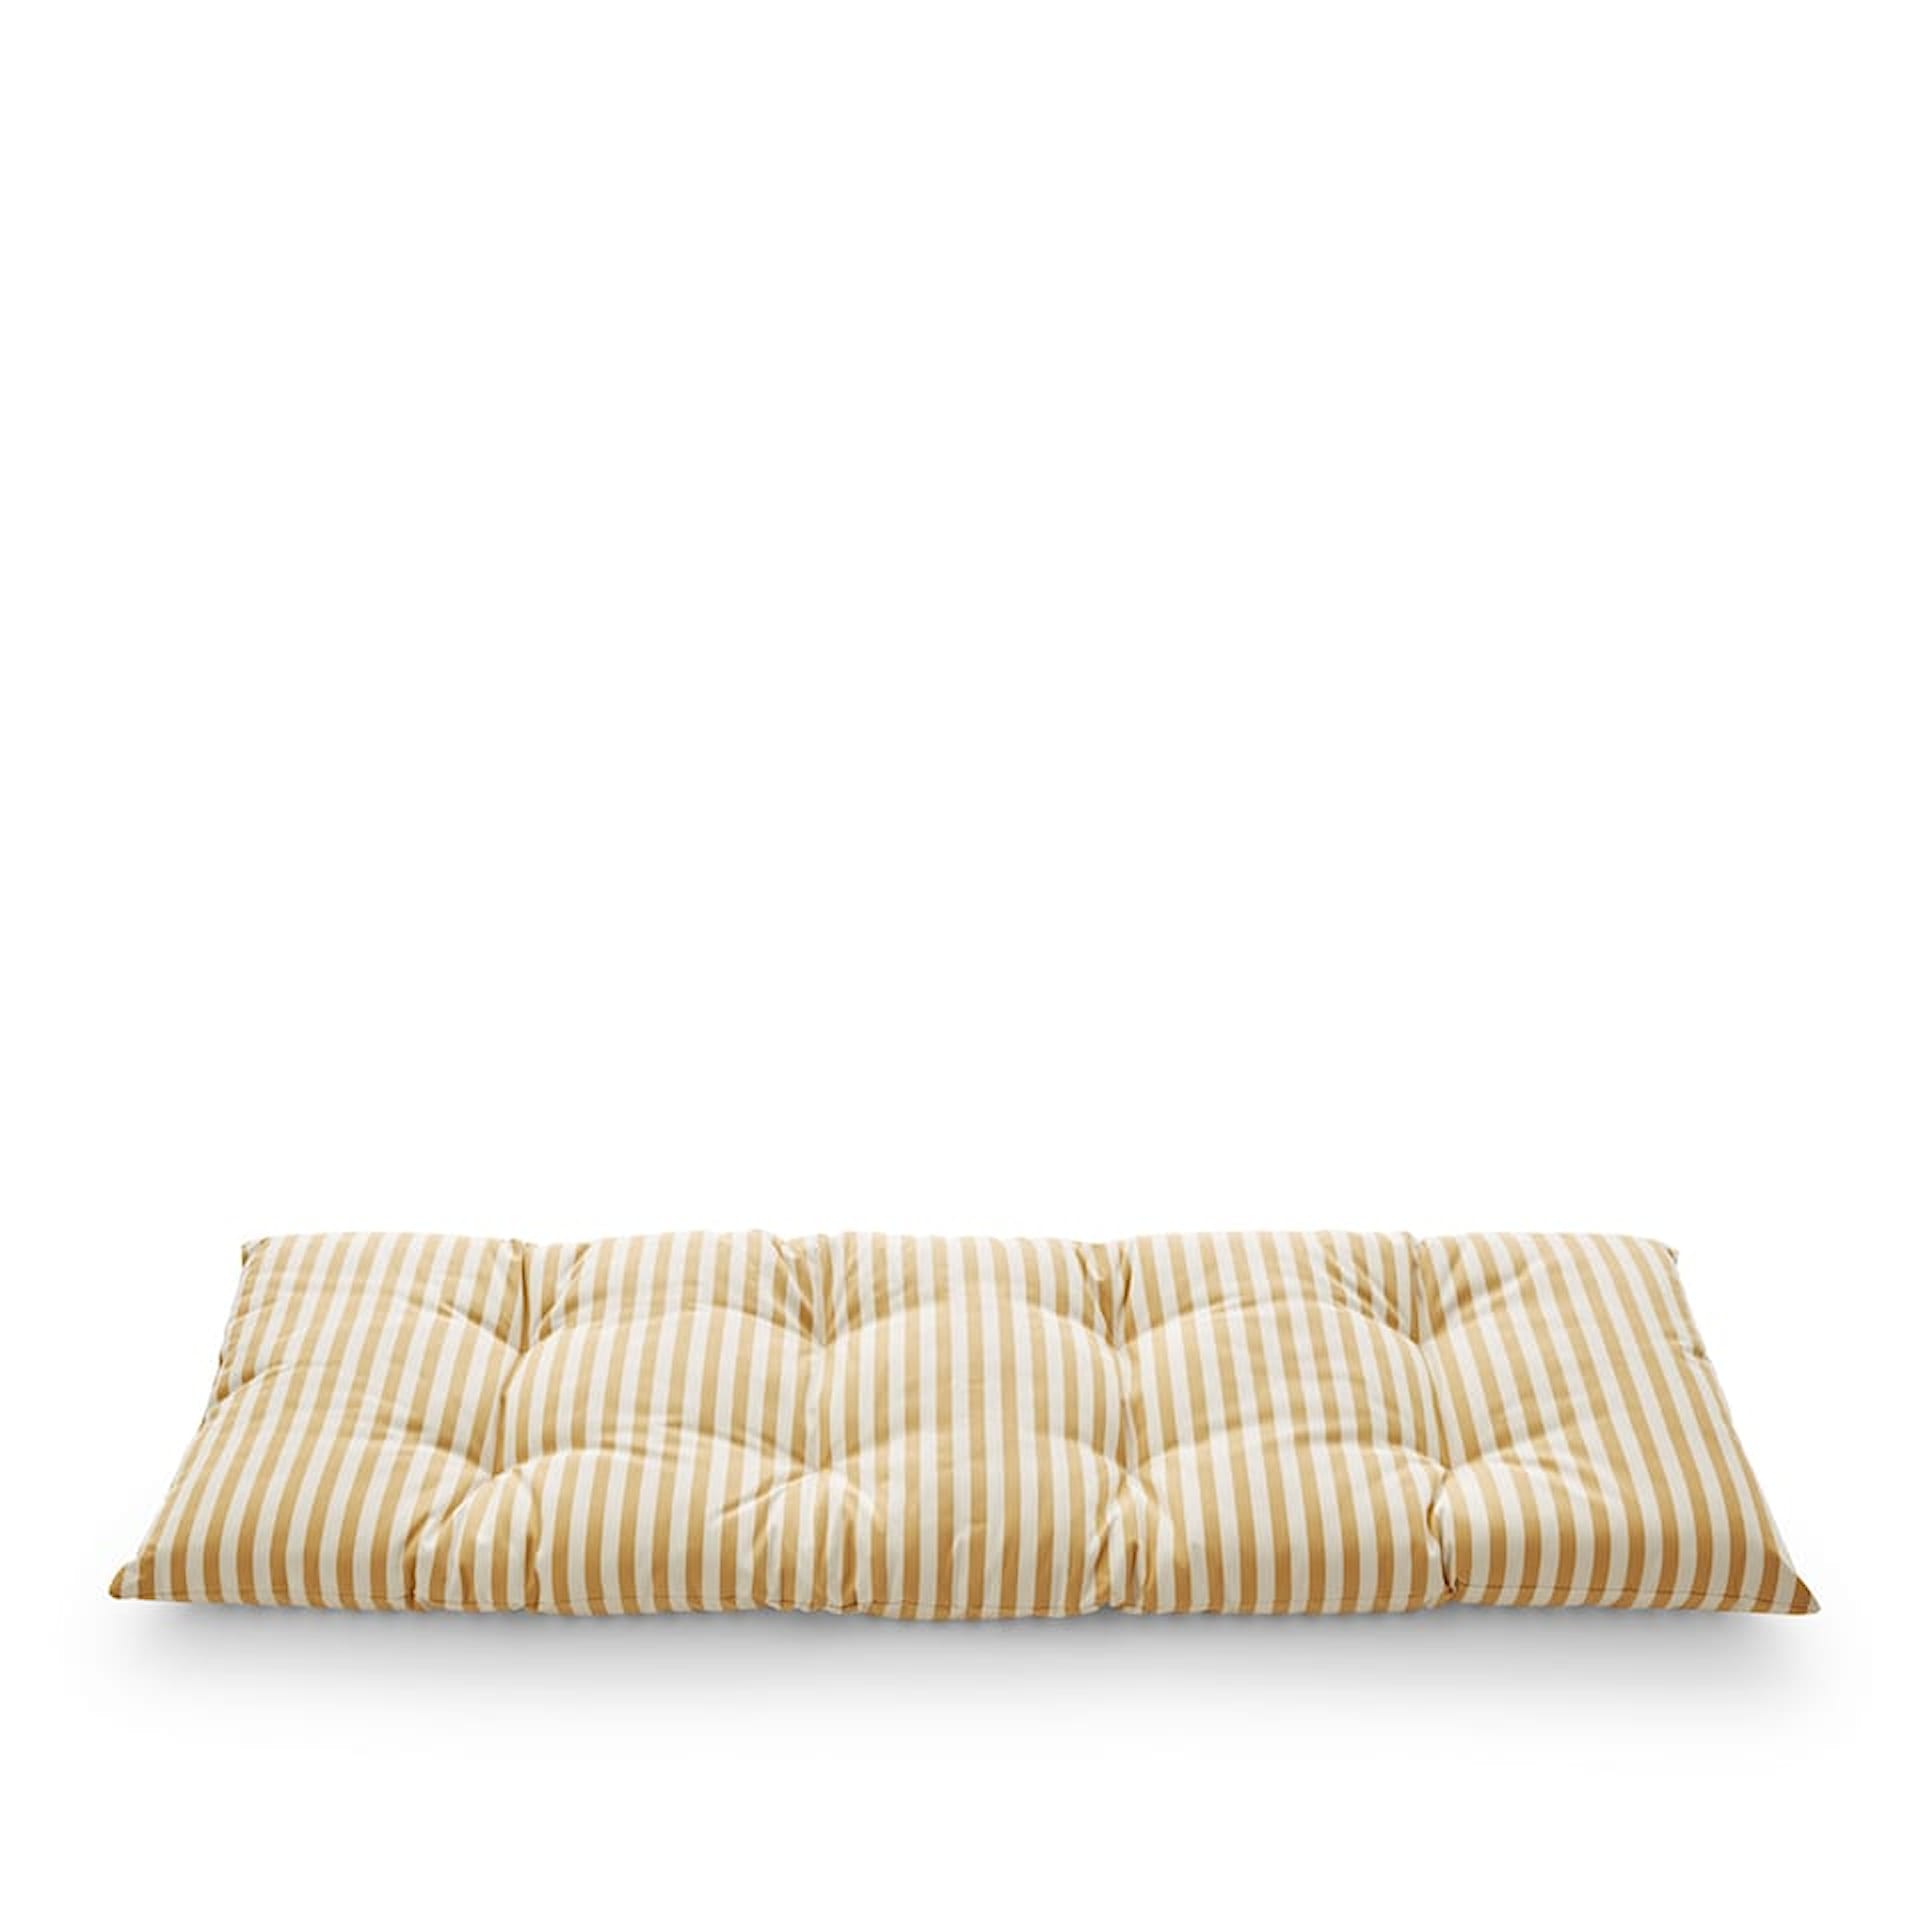 Barriere Cushion 125 x 43 cm - Fritz Hansen - NO GA